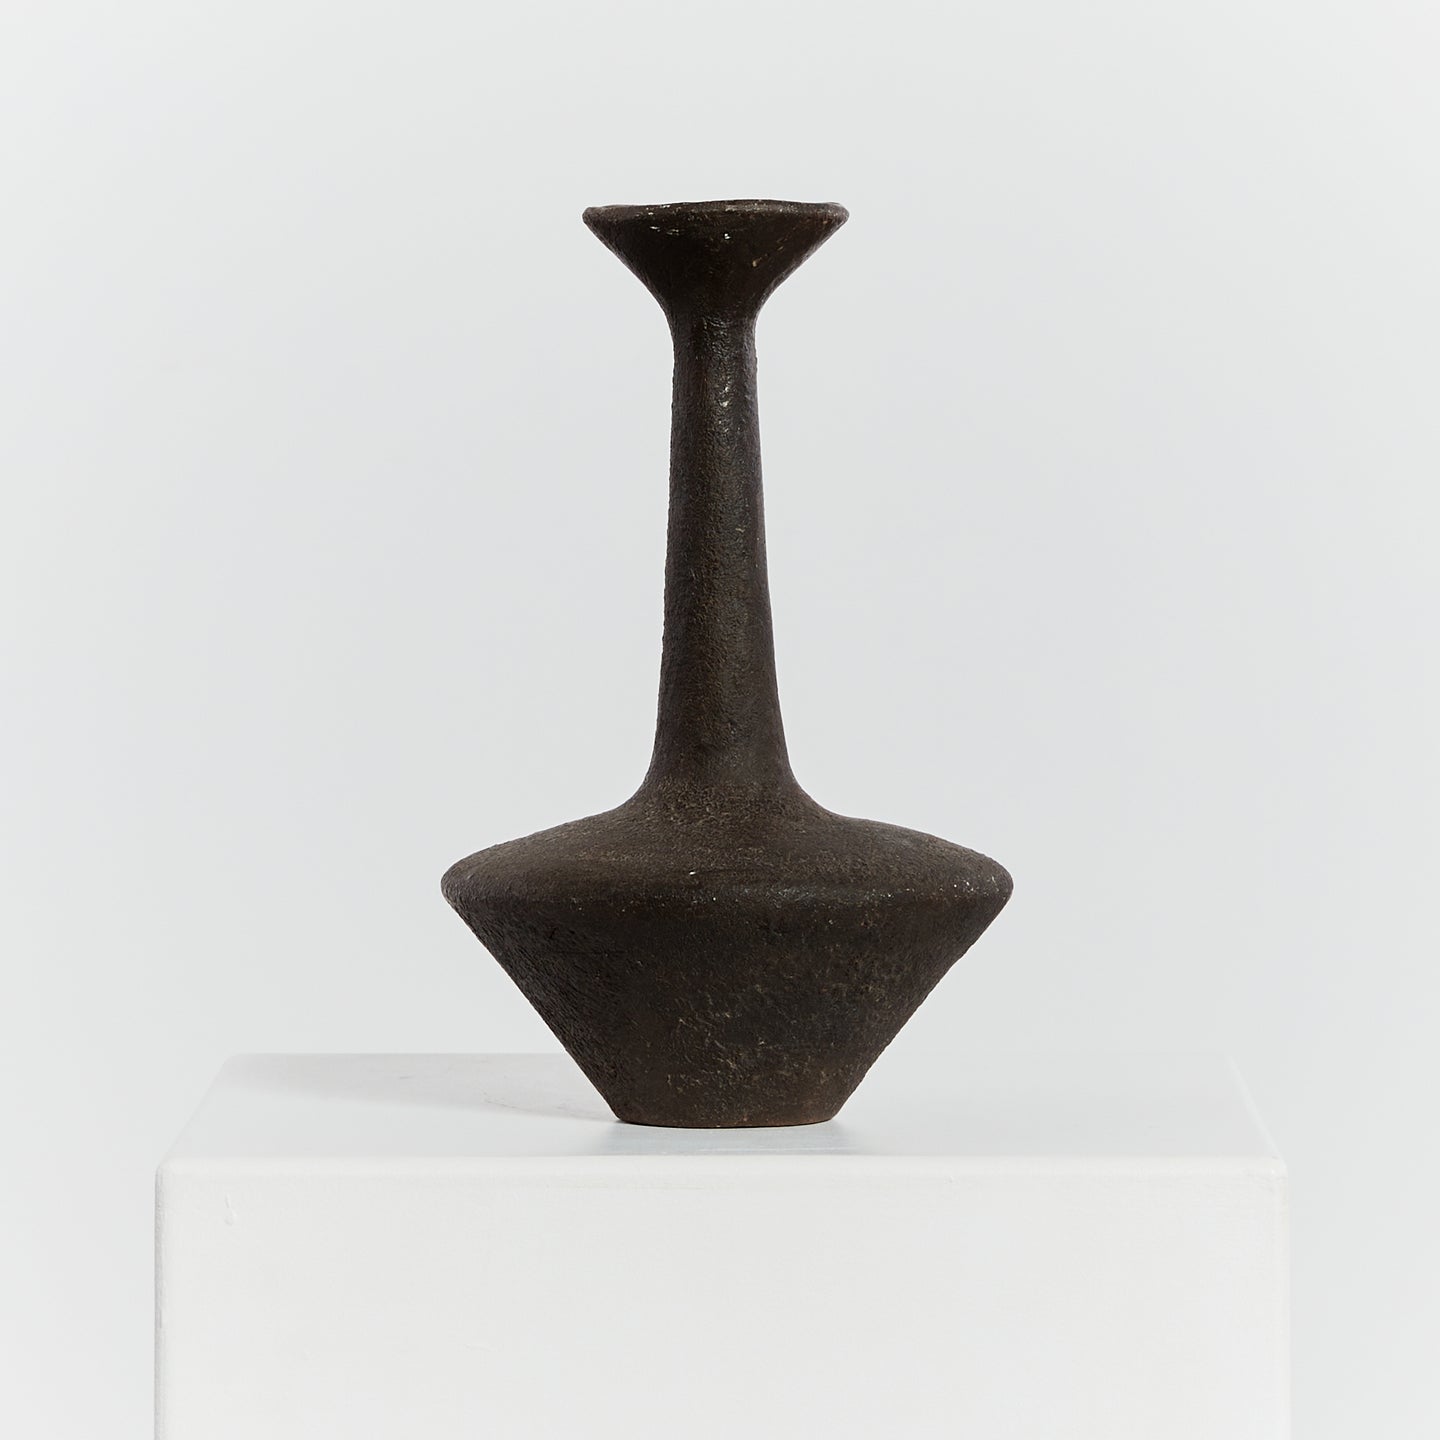 Sculptural studio pottery vessel